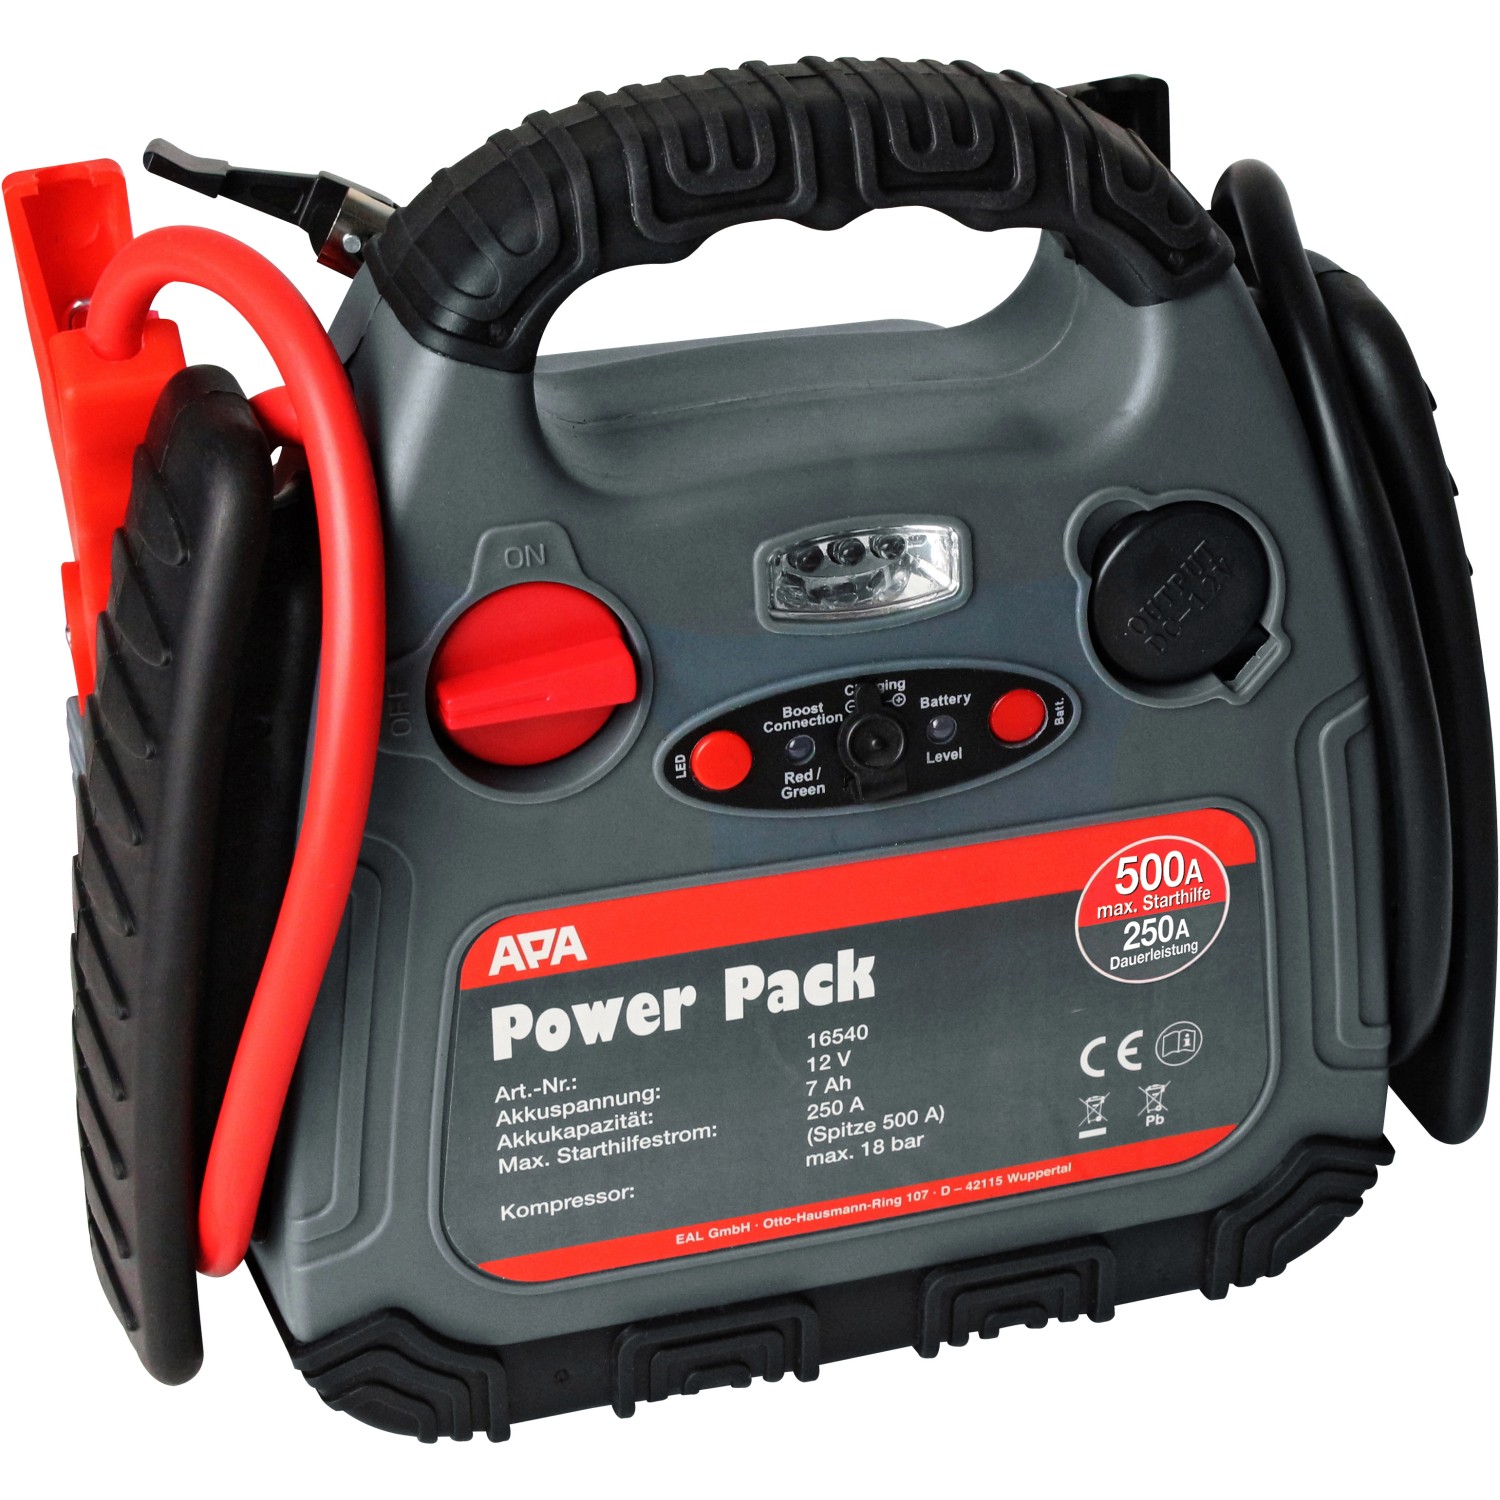 APA Starthilfe Powerpack 250 A mit Kompressor